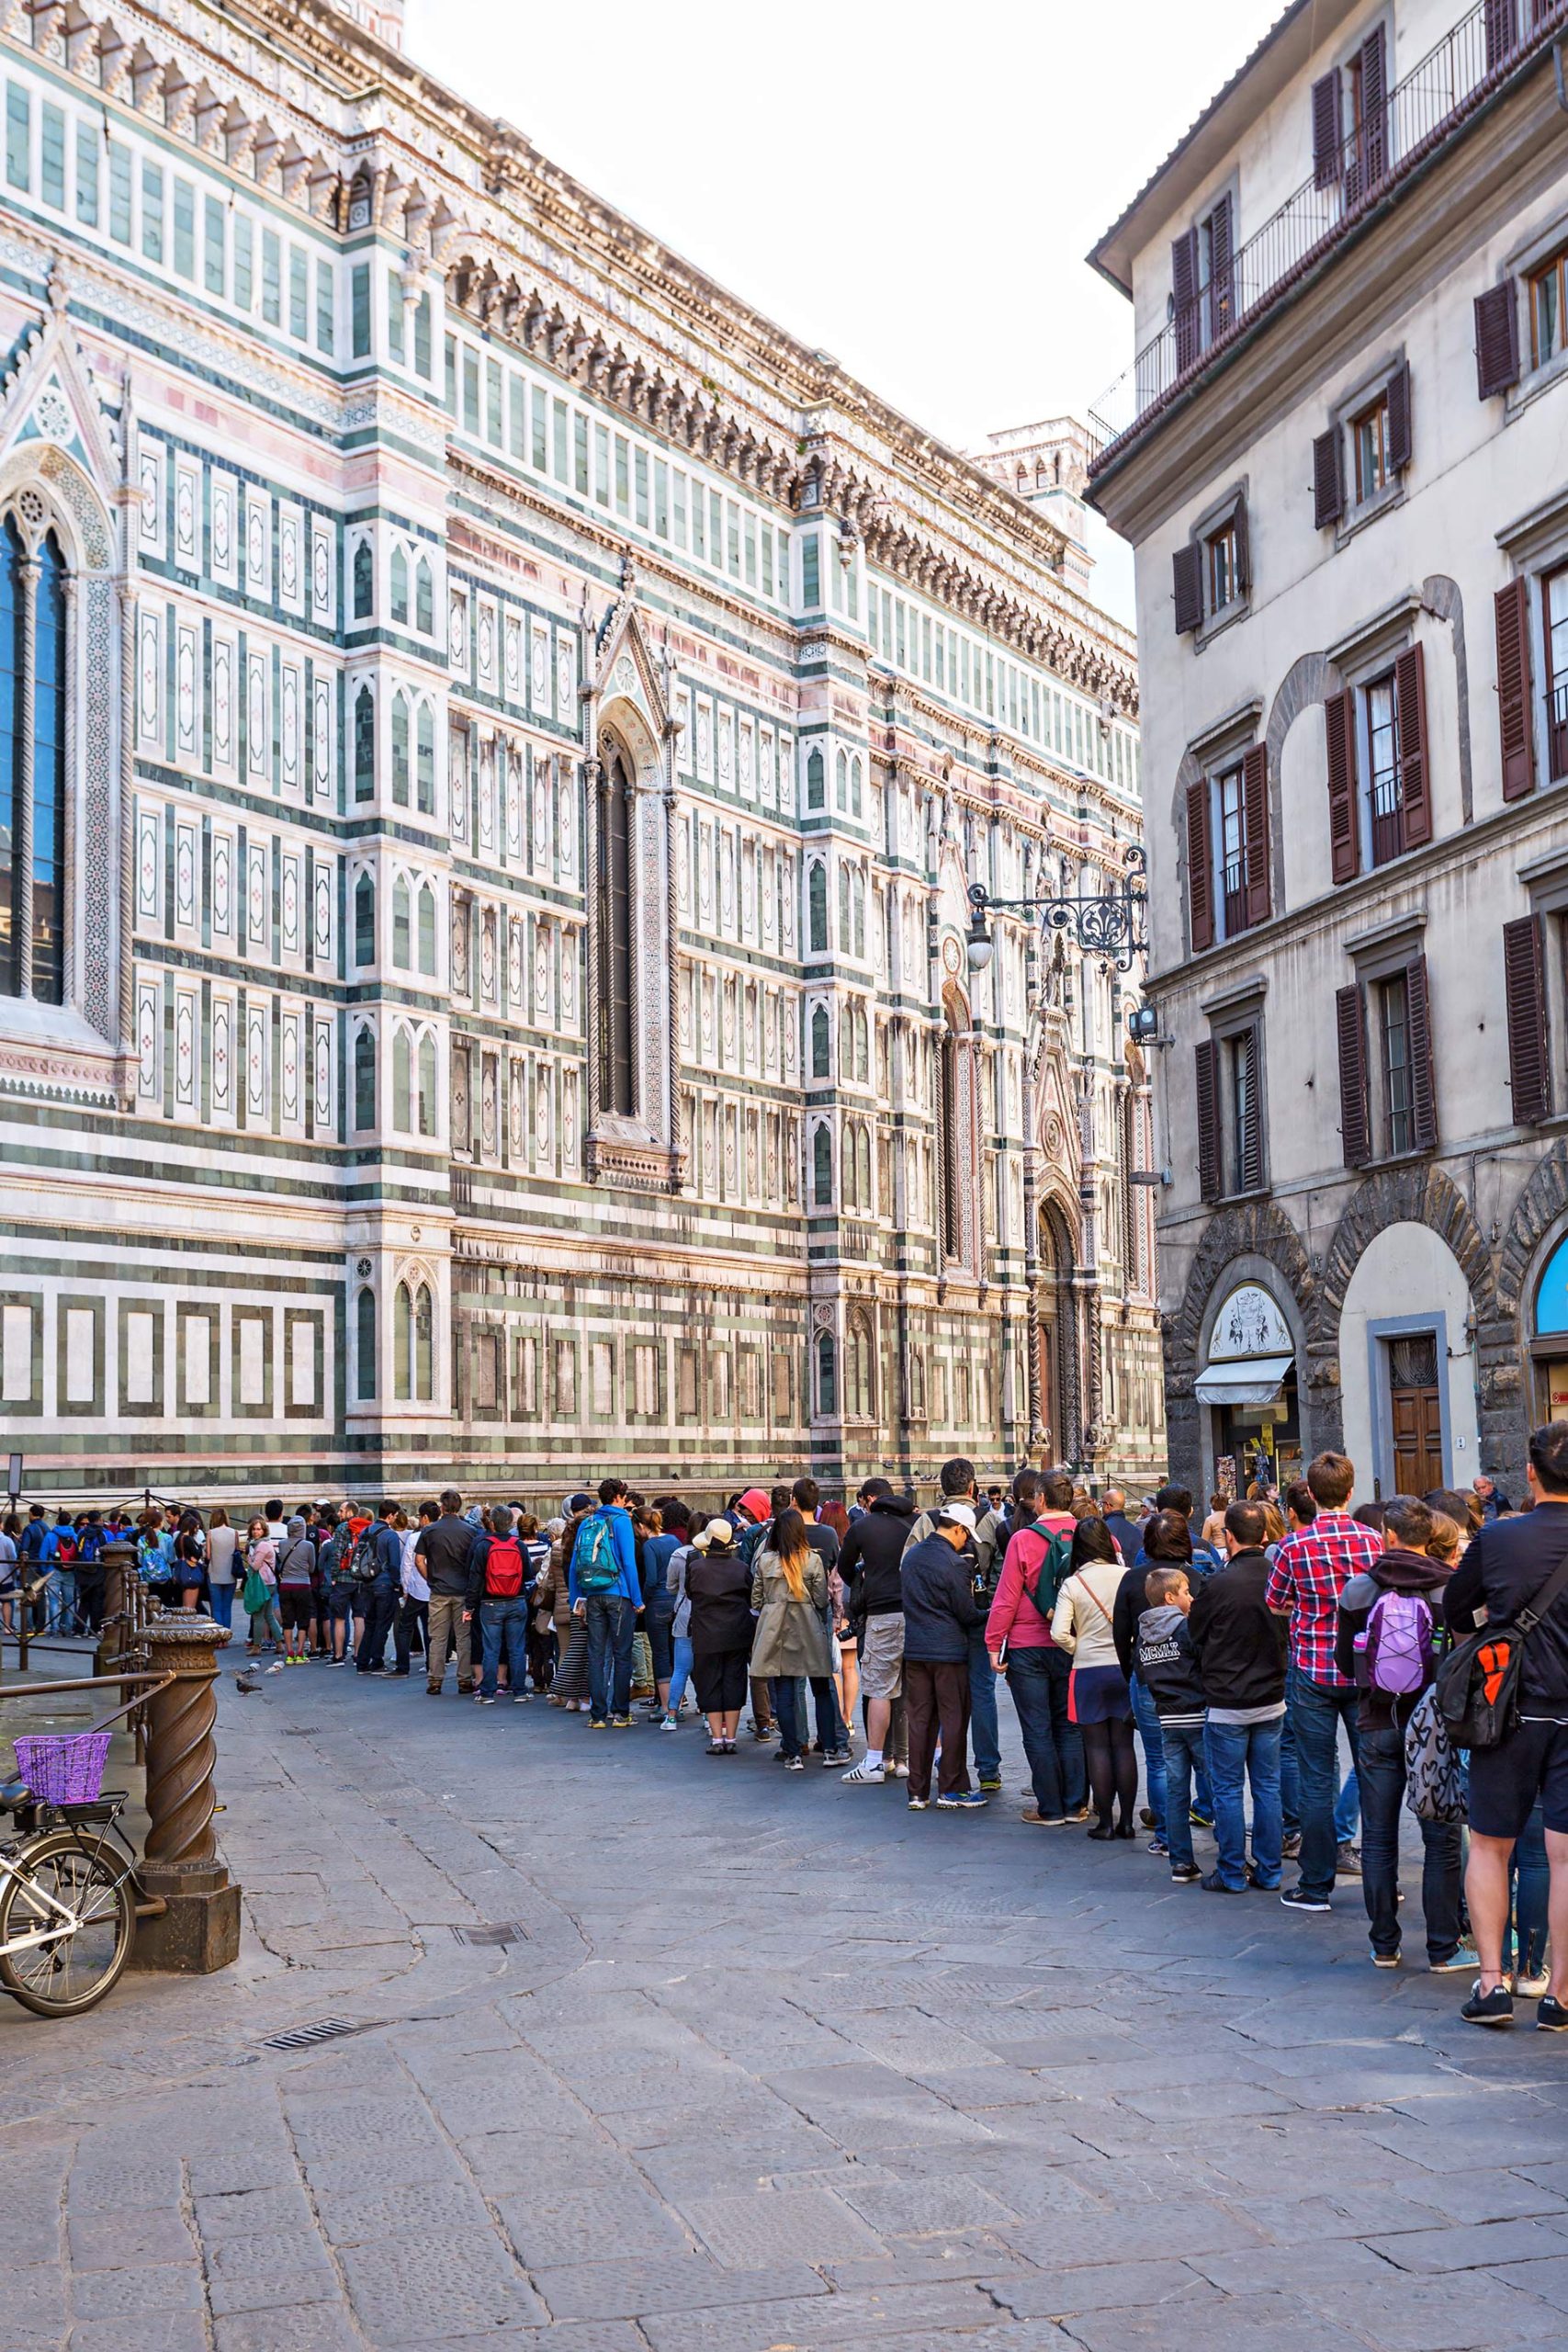 Tourist Line-up - Santa Maria del Fiore Cathedral - Piazza del Duomo - Florence, Italy